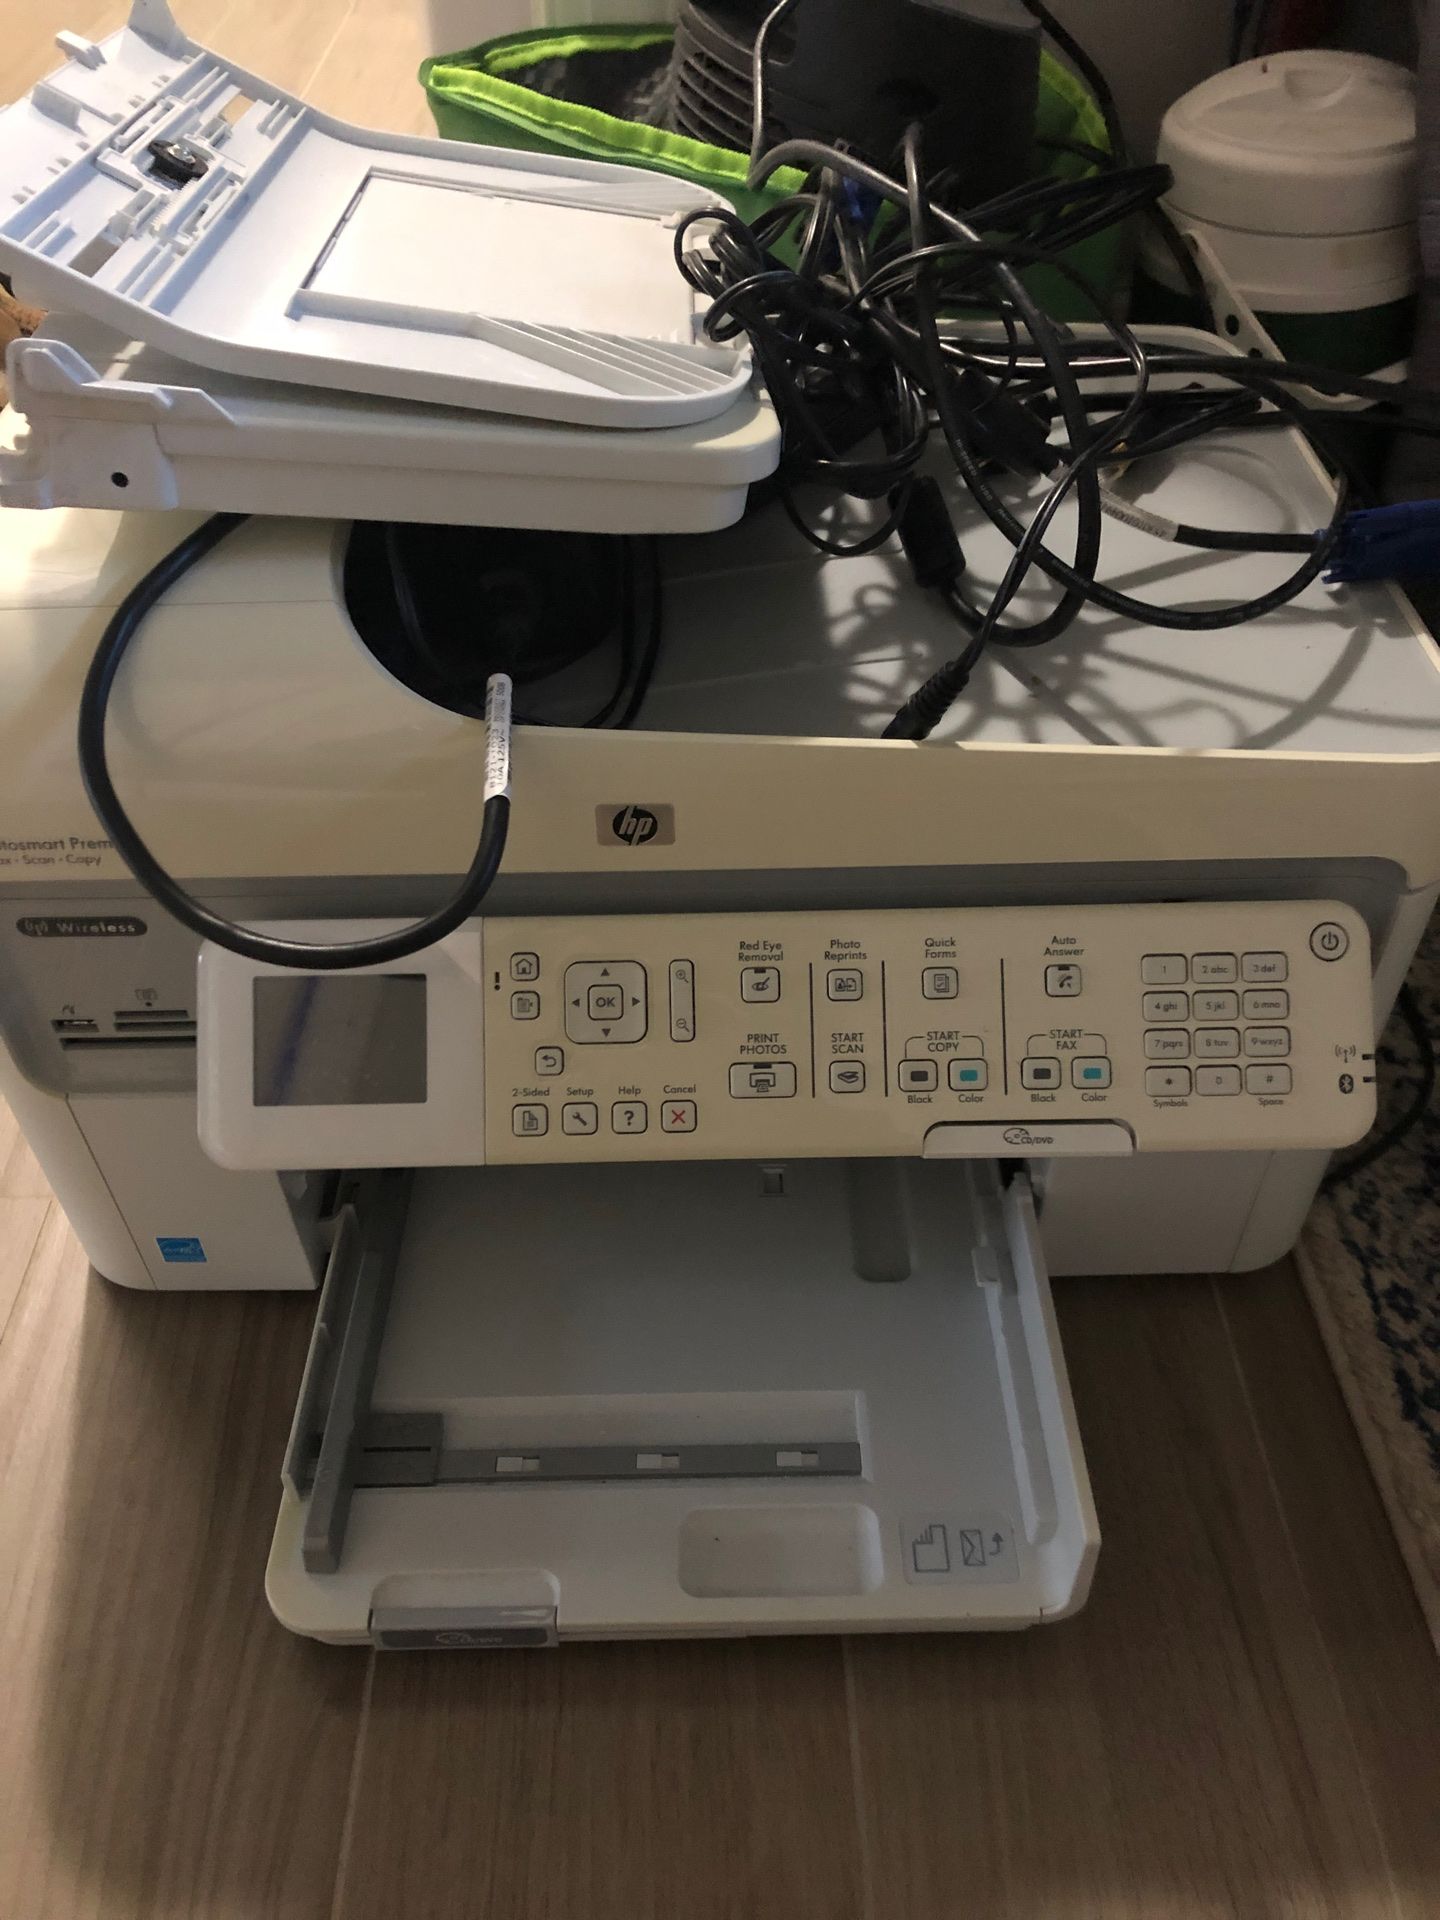 HP printer, scanner, copier